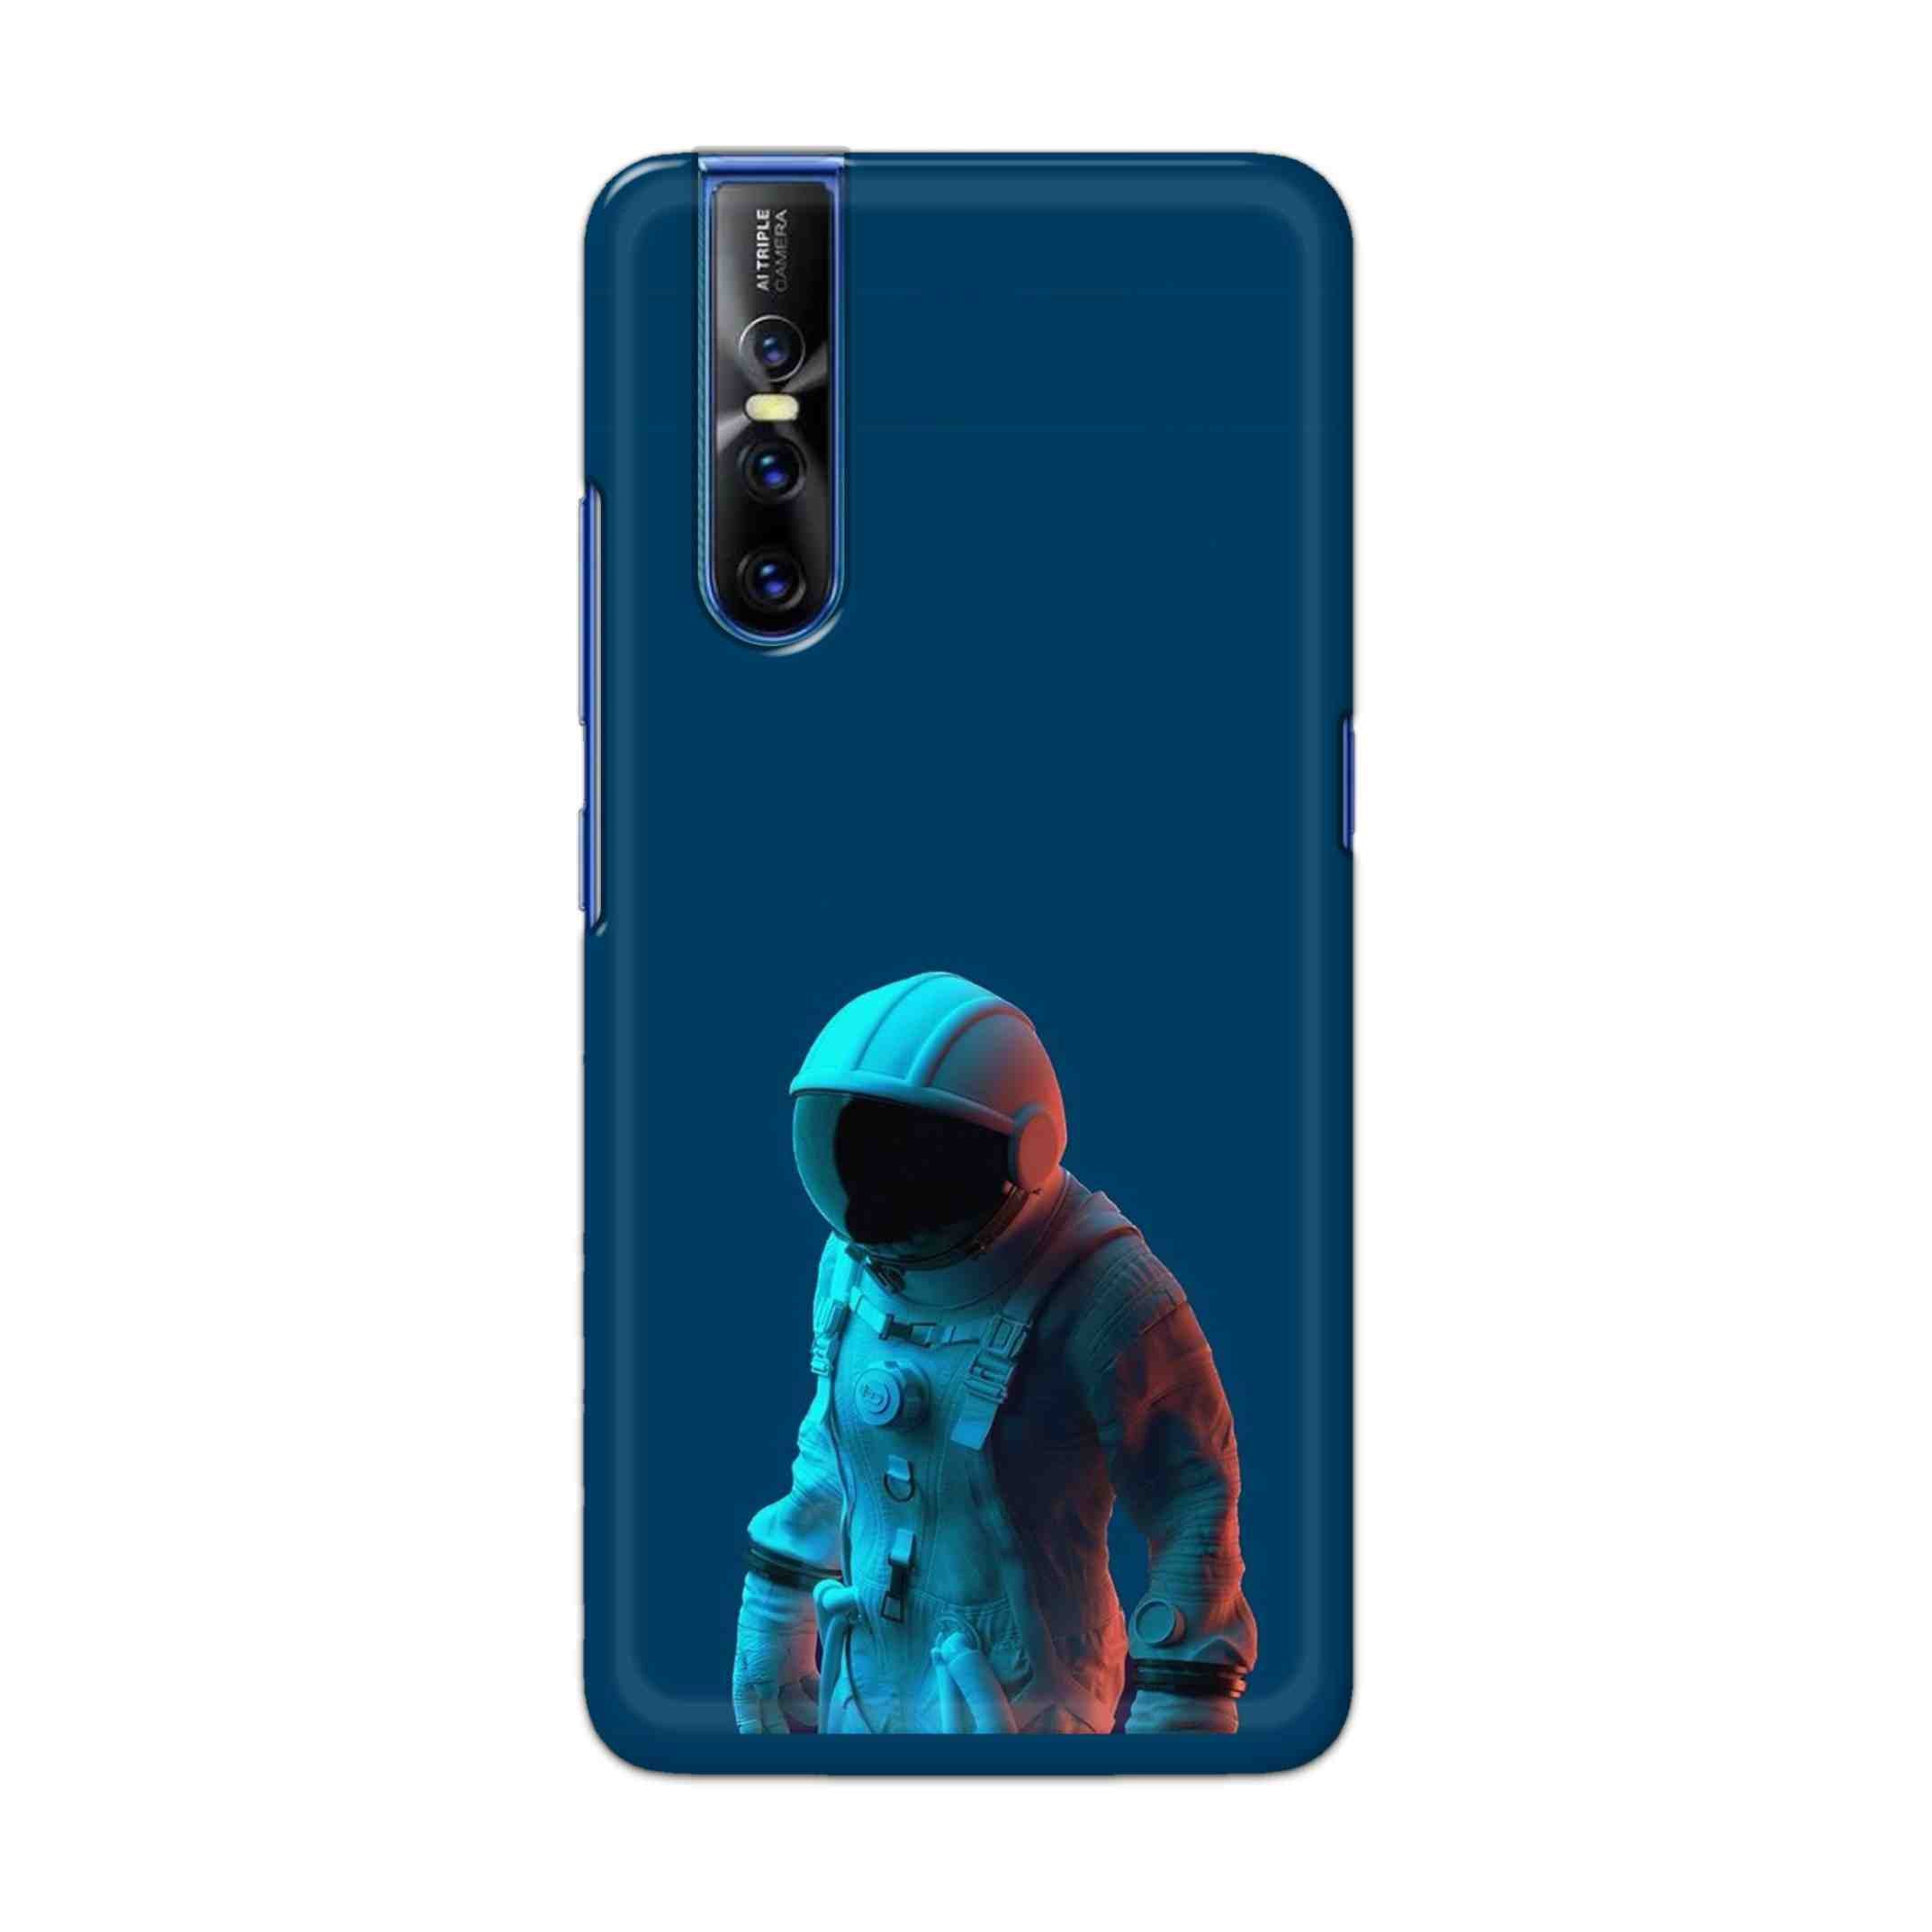 Buy Blue Astronaut Hard Back Mobile Phone Case Cover For Vivo V15 Pro Online